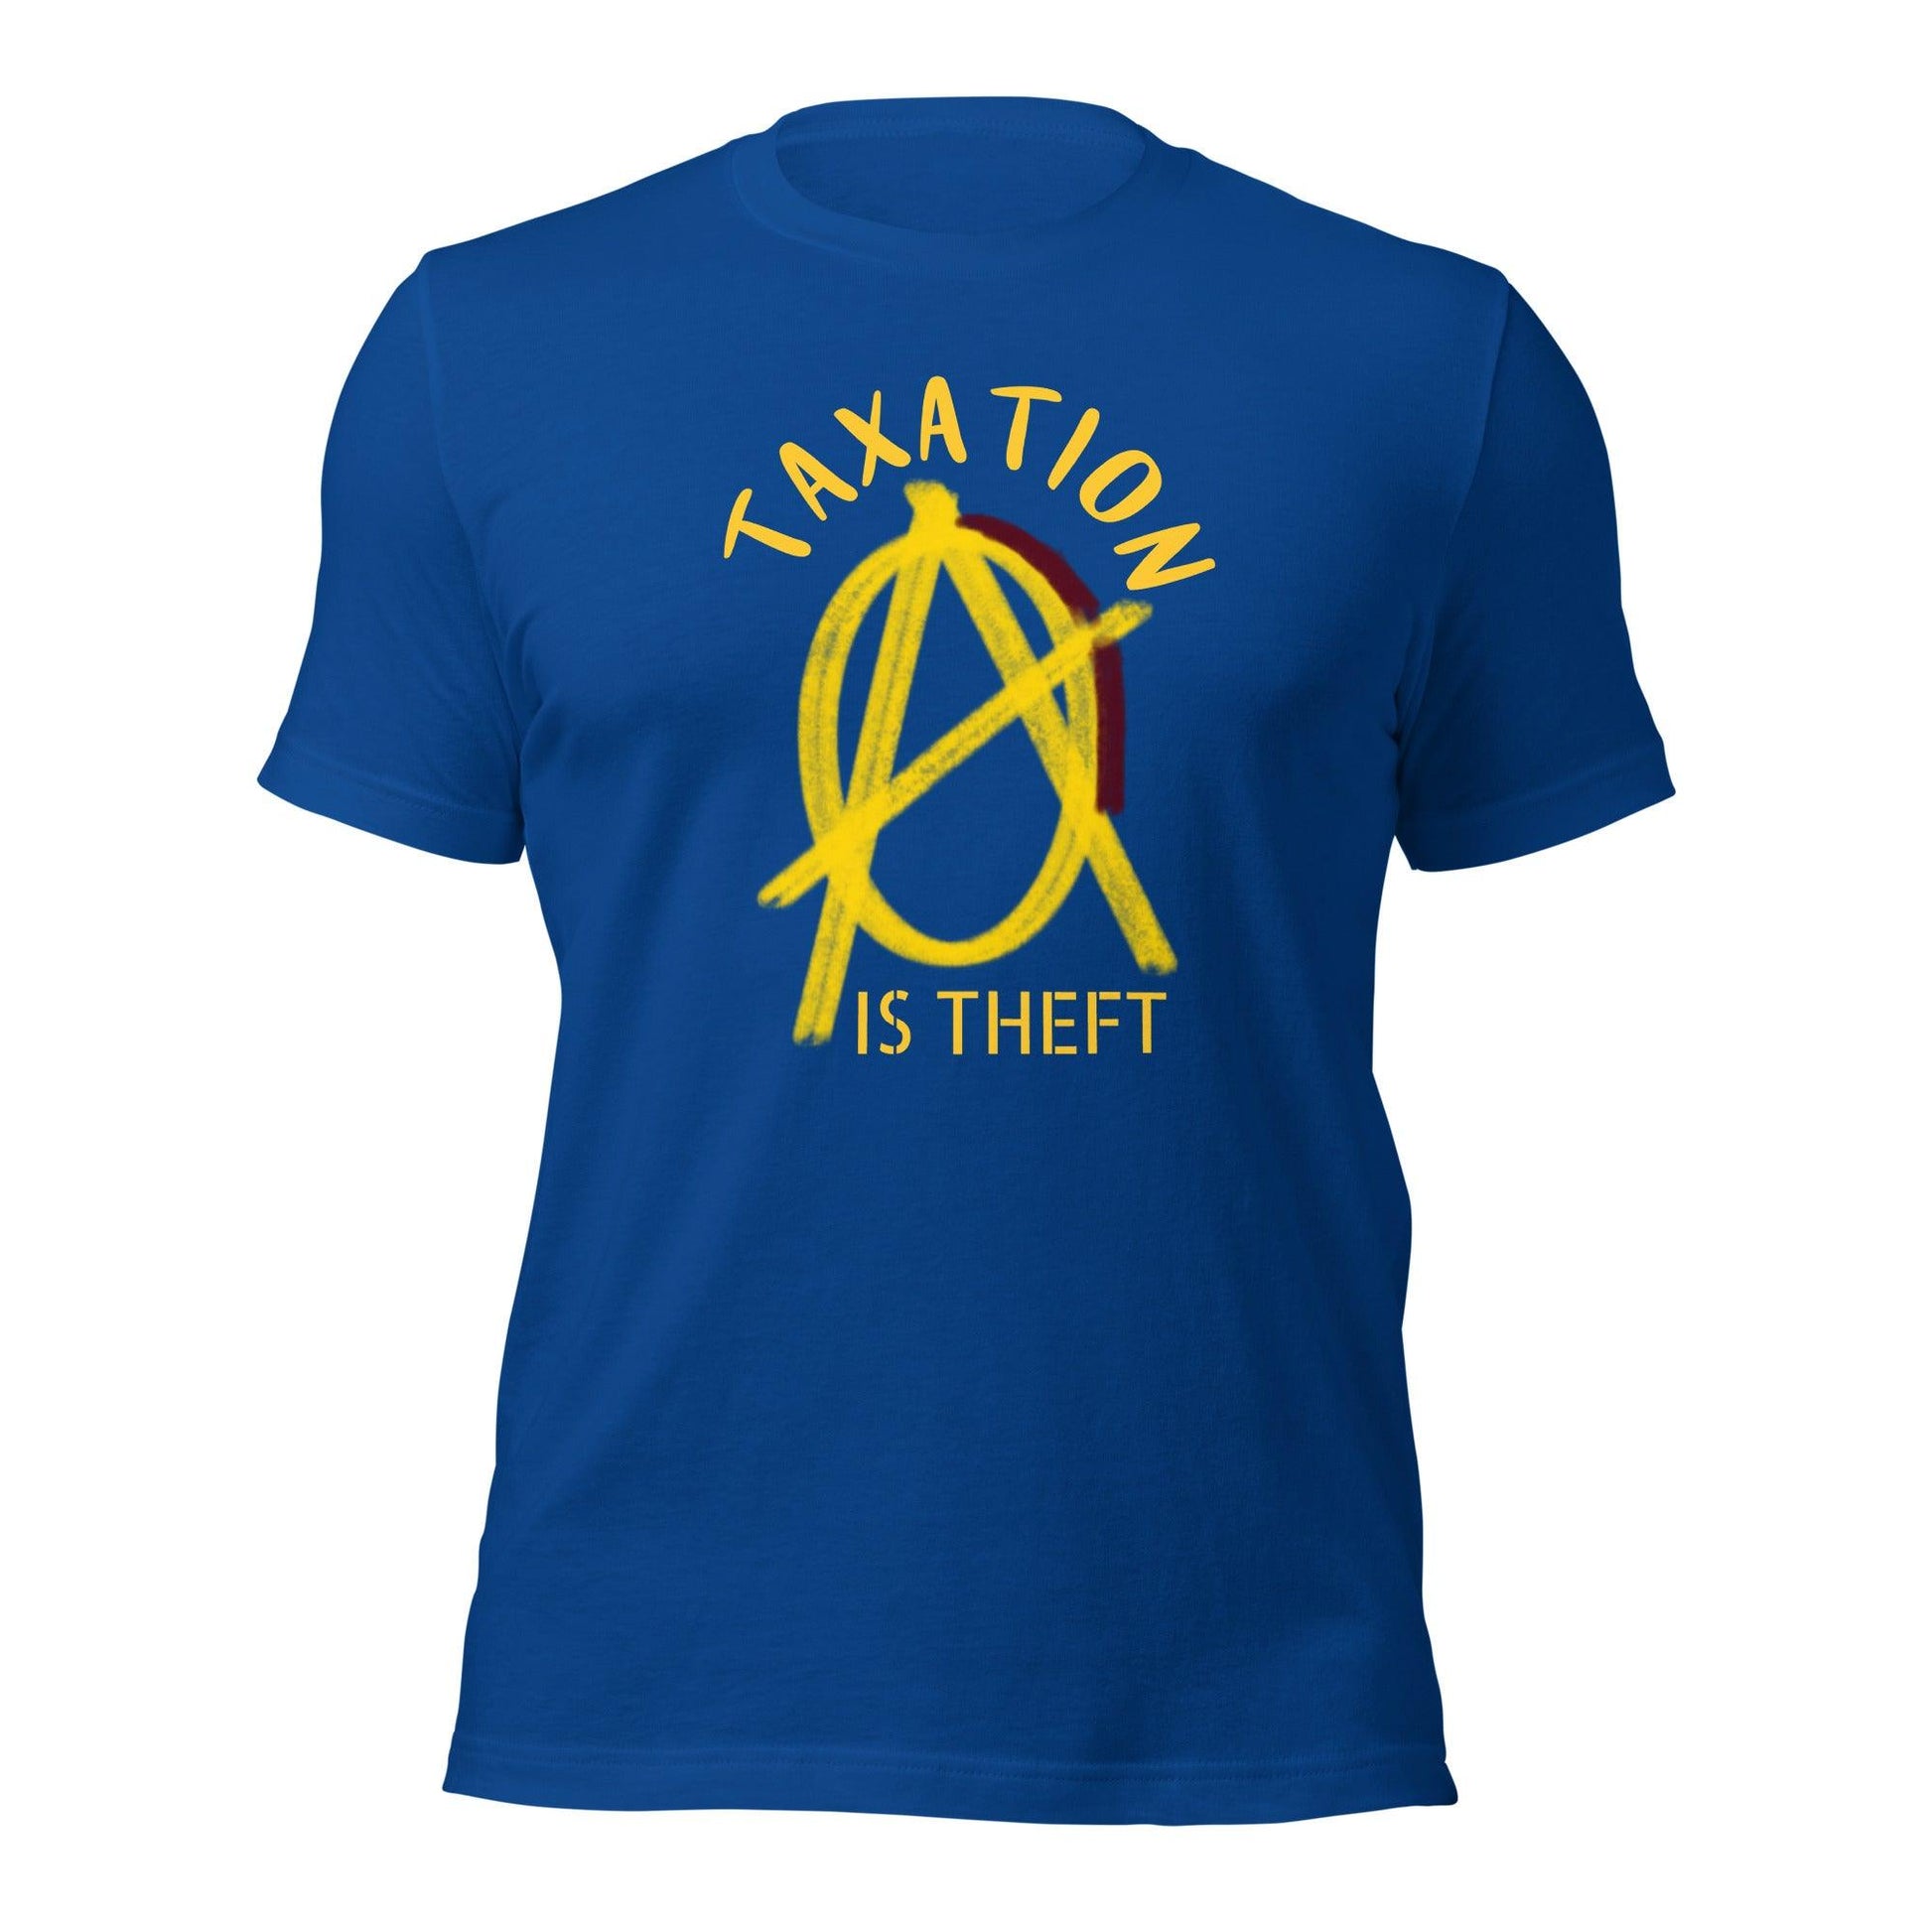 Anarchy Wear "Taxation Is Theft" Unisex t-shirt - AnarchyWear